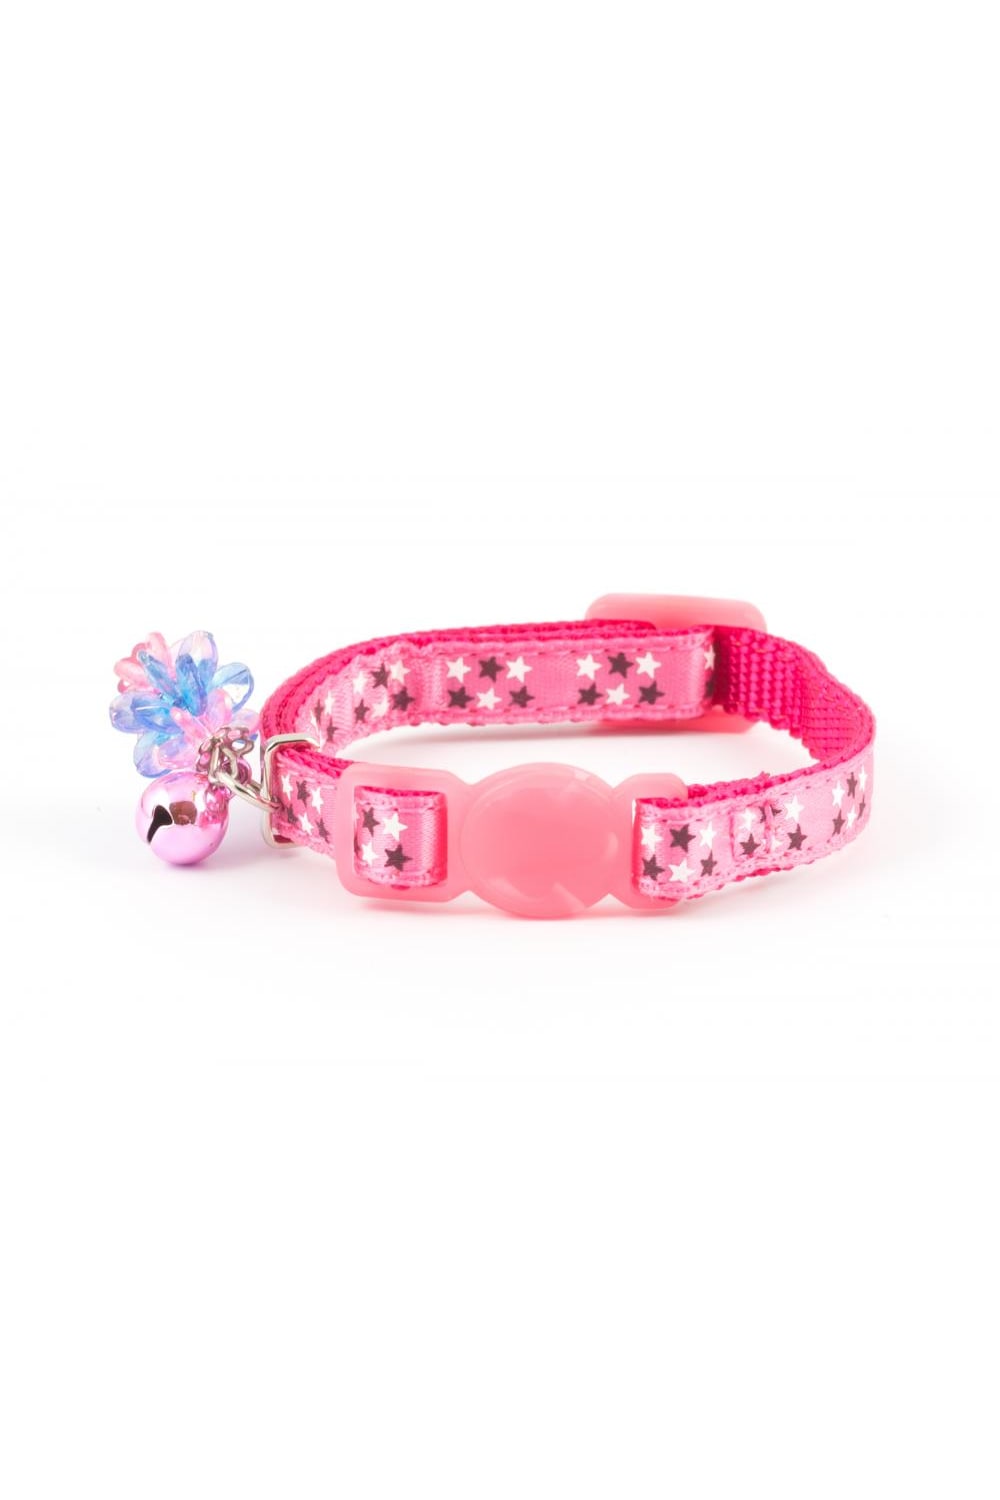 Ancol Luxury Kitten Collar (Pink) (One Size)